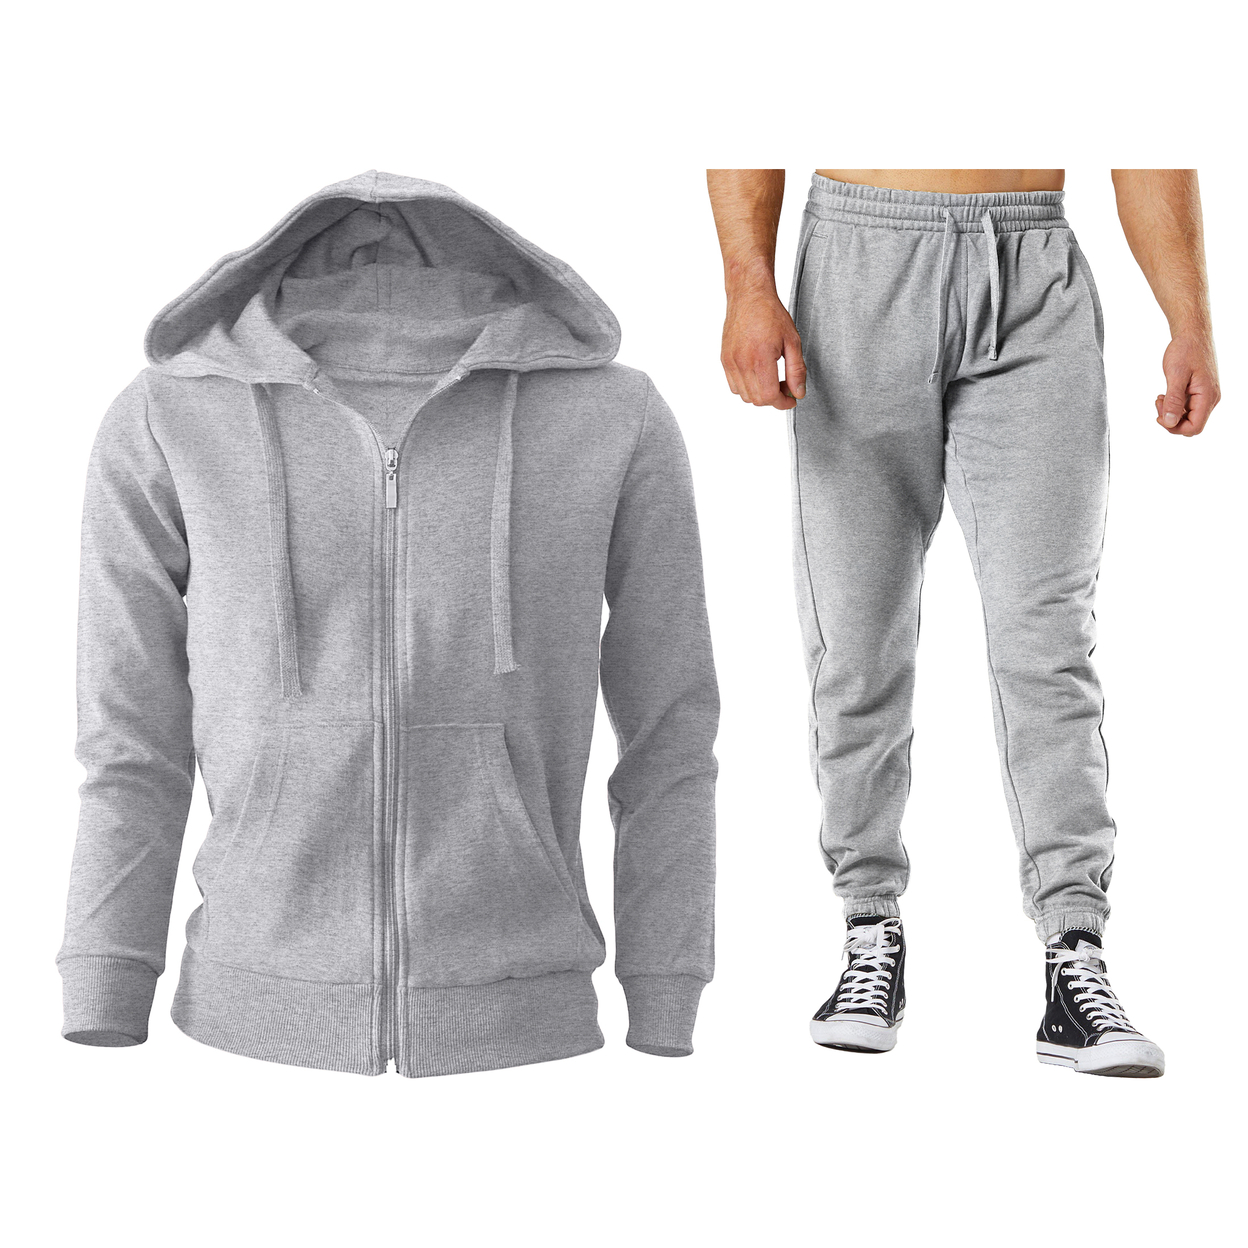 2/4-Piece: Men's Winter Warm Cozy Athletic Multi-Pockets BIG & TALL Sweatsuit Set - Grey, 1, Xx-large